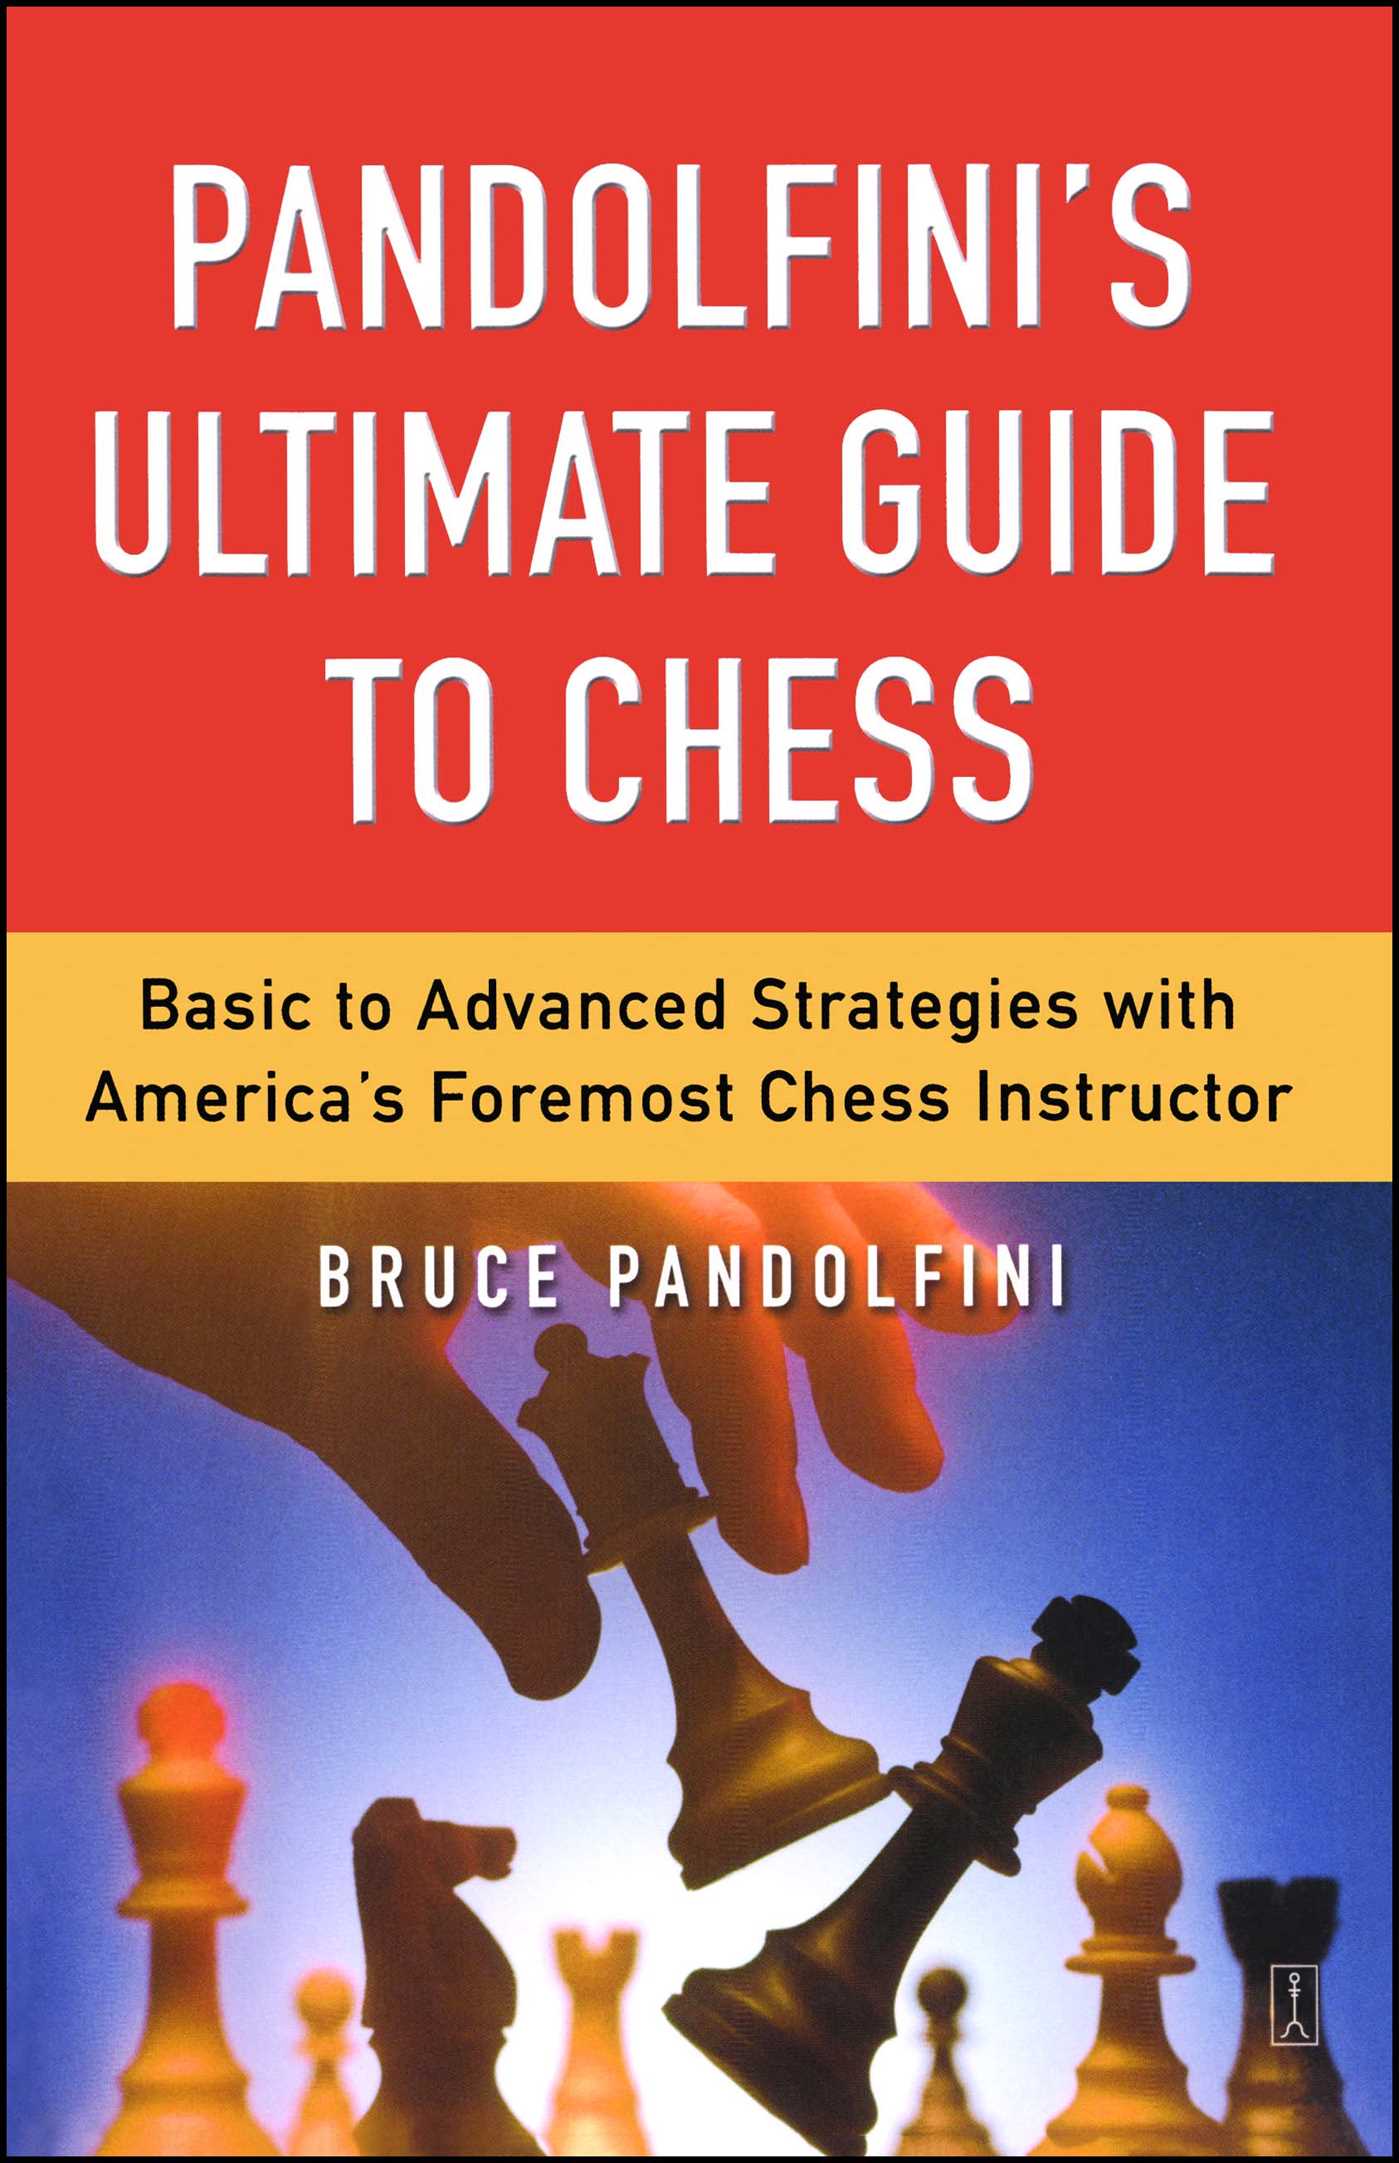 Pandolfini's Ultimate Guide to Chess - 10-14.99